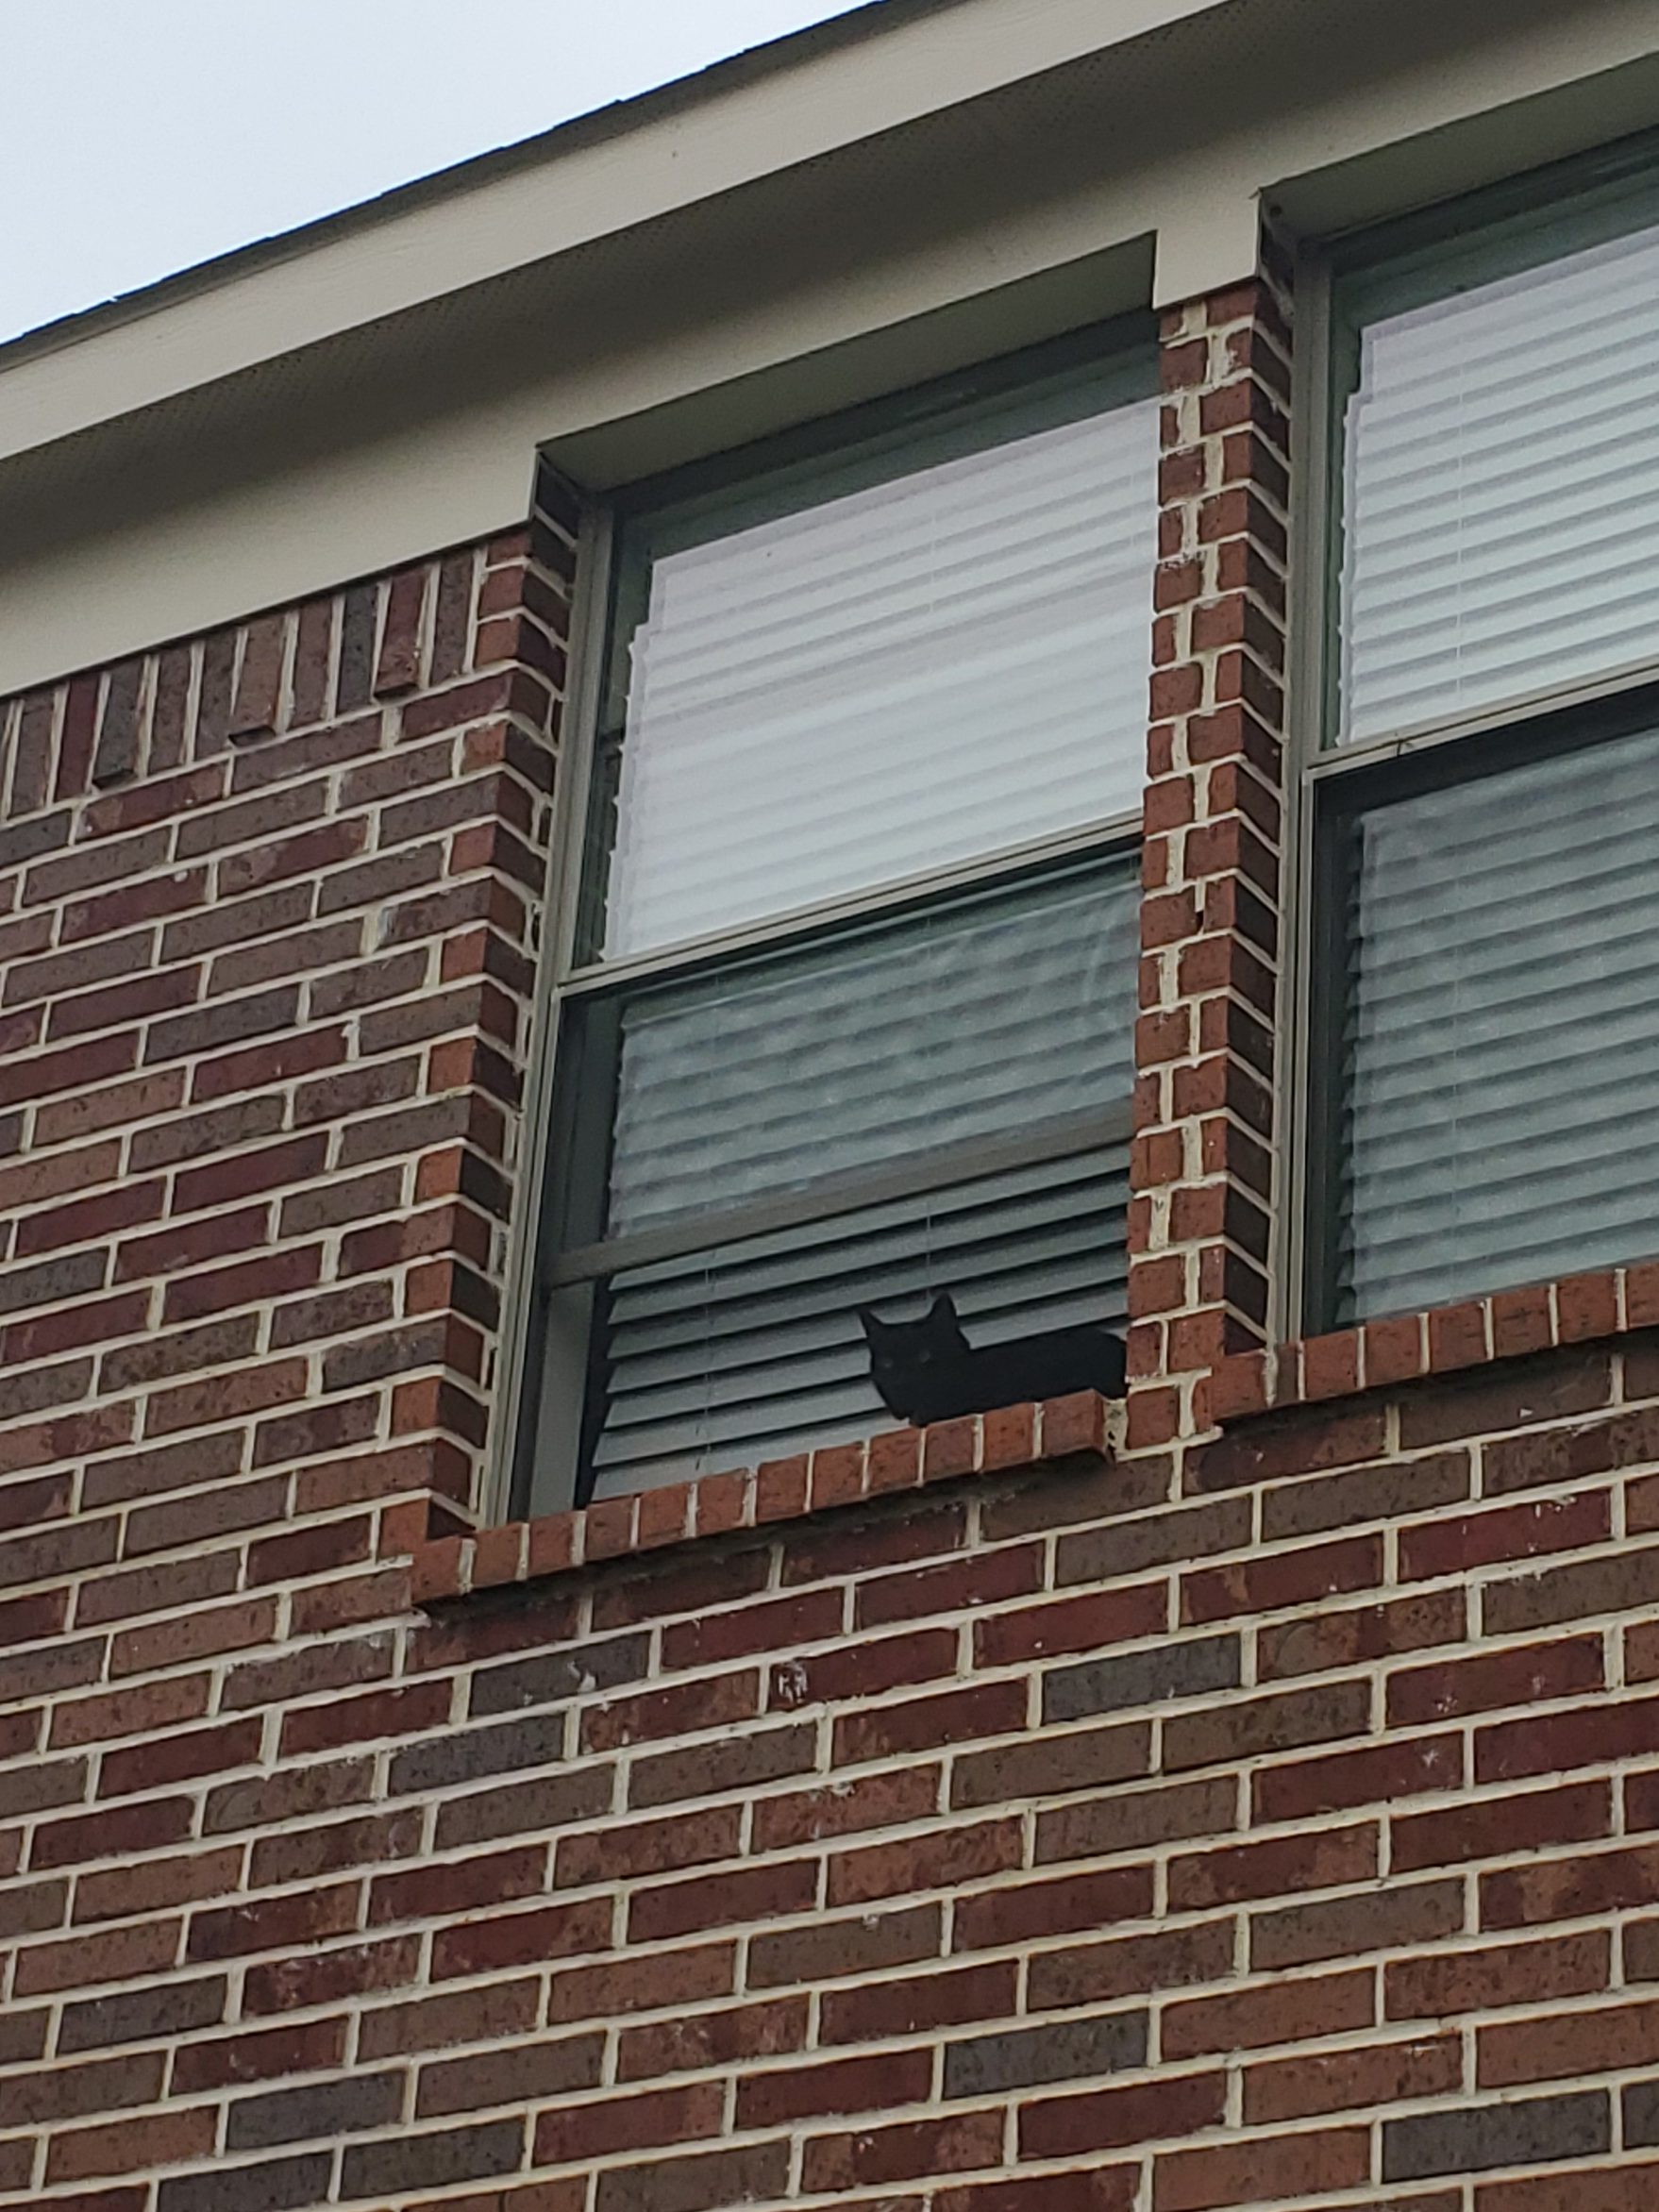 Black cat sits in window.  